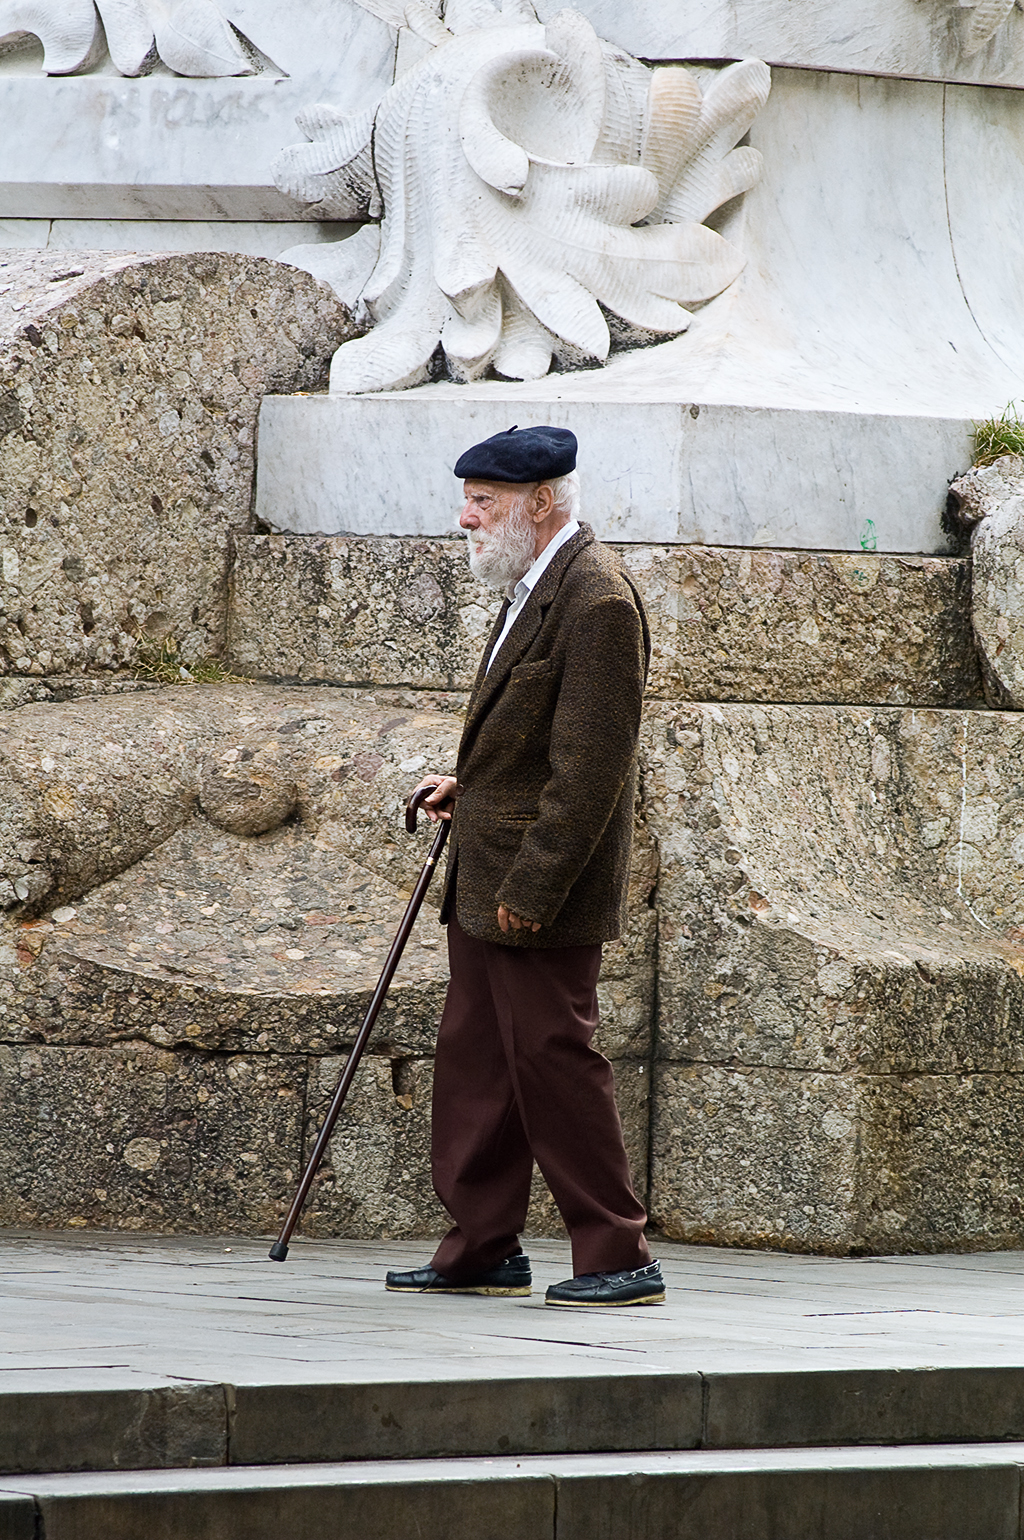 Barcelona Photoblog: Old Man With Walking Stick